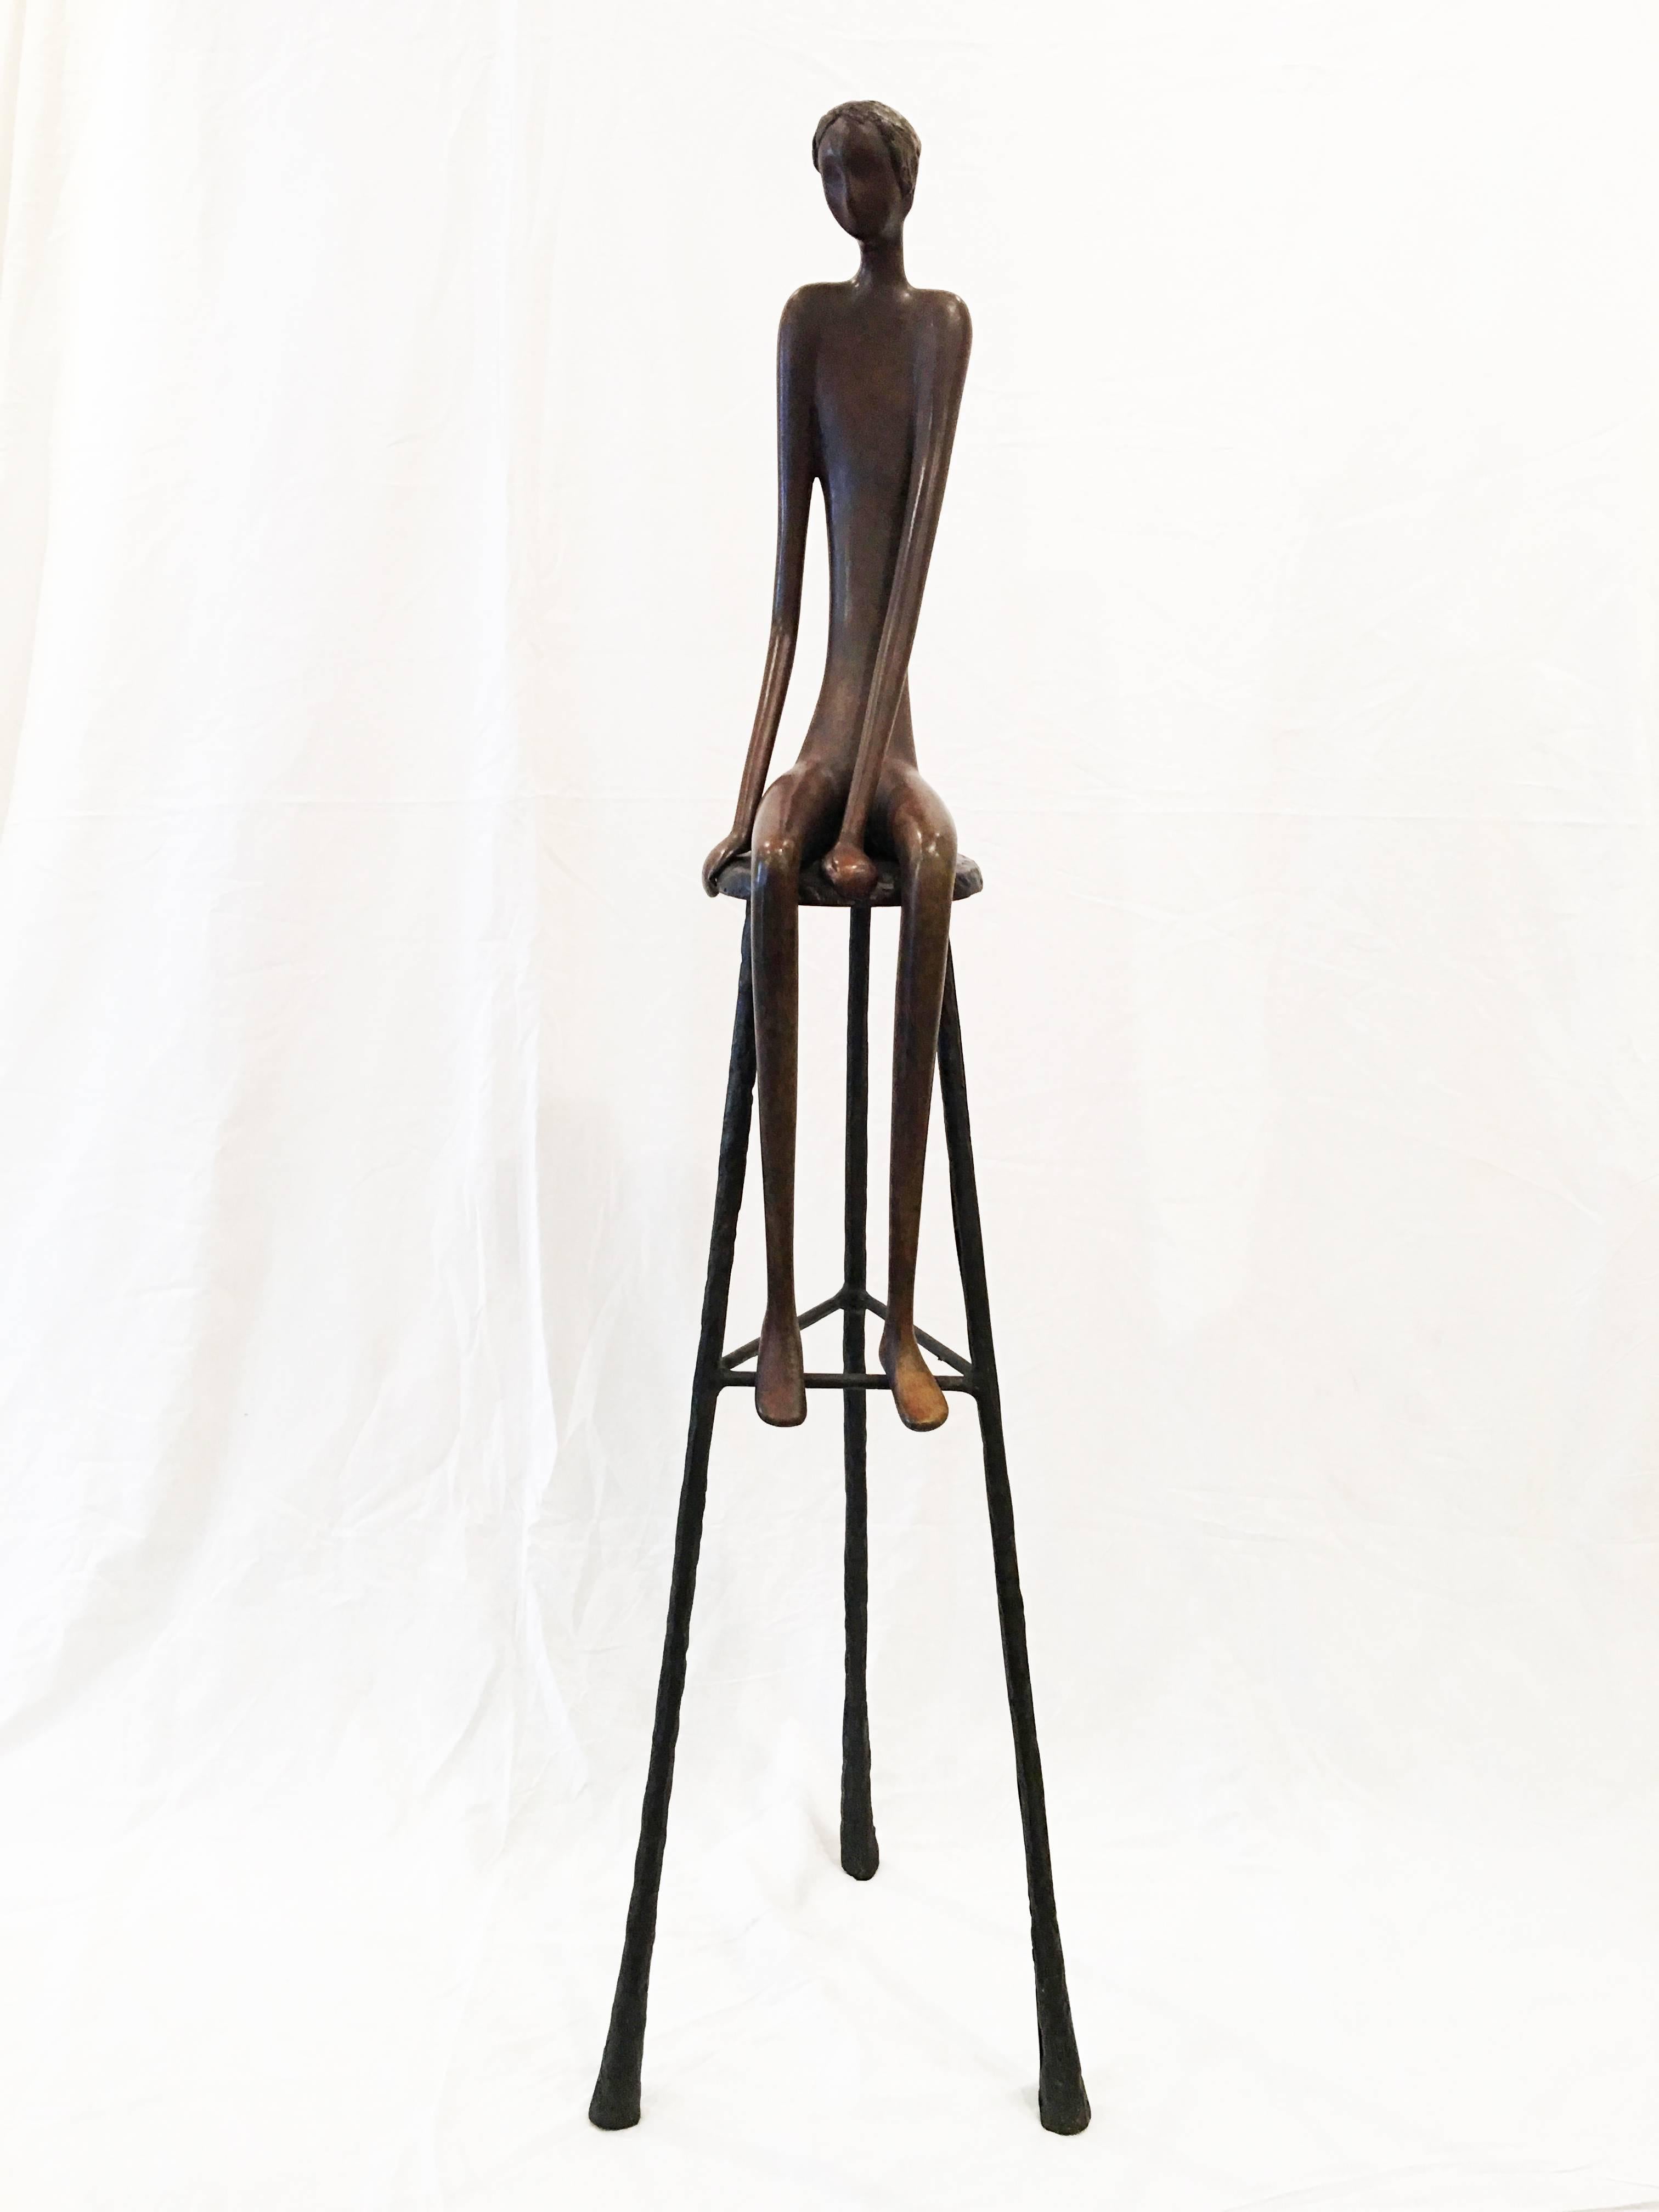 Ruth Bloch Figurative Sculpture - Man on Stool, Bronze Sculpture - Edition 7 of 25